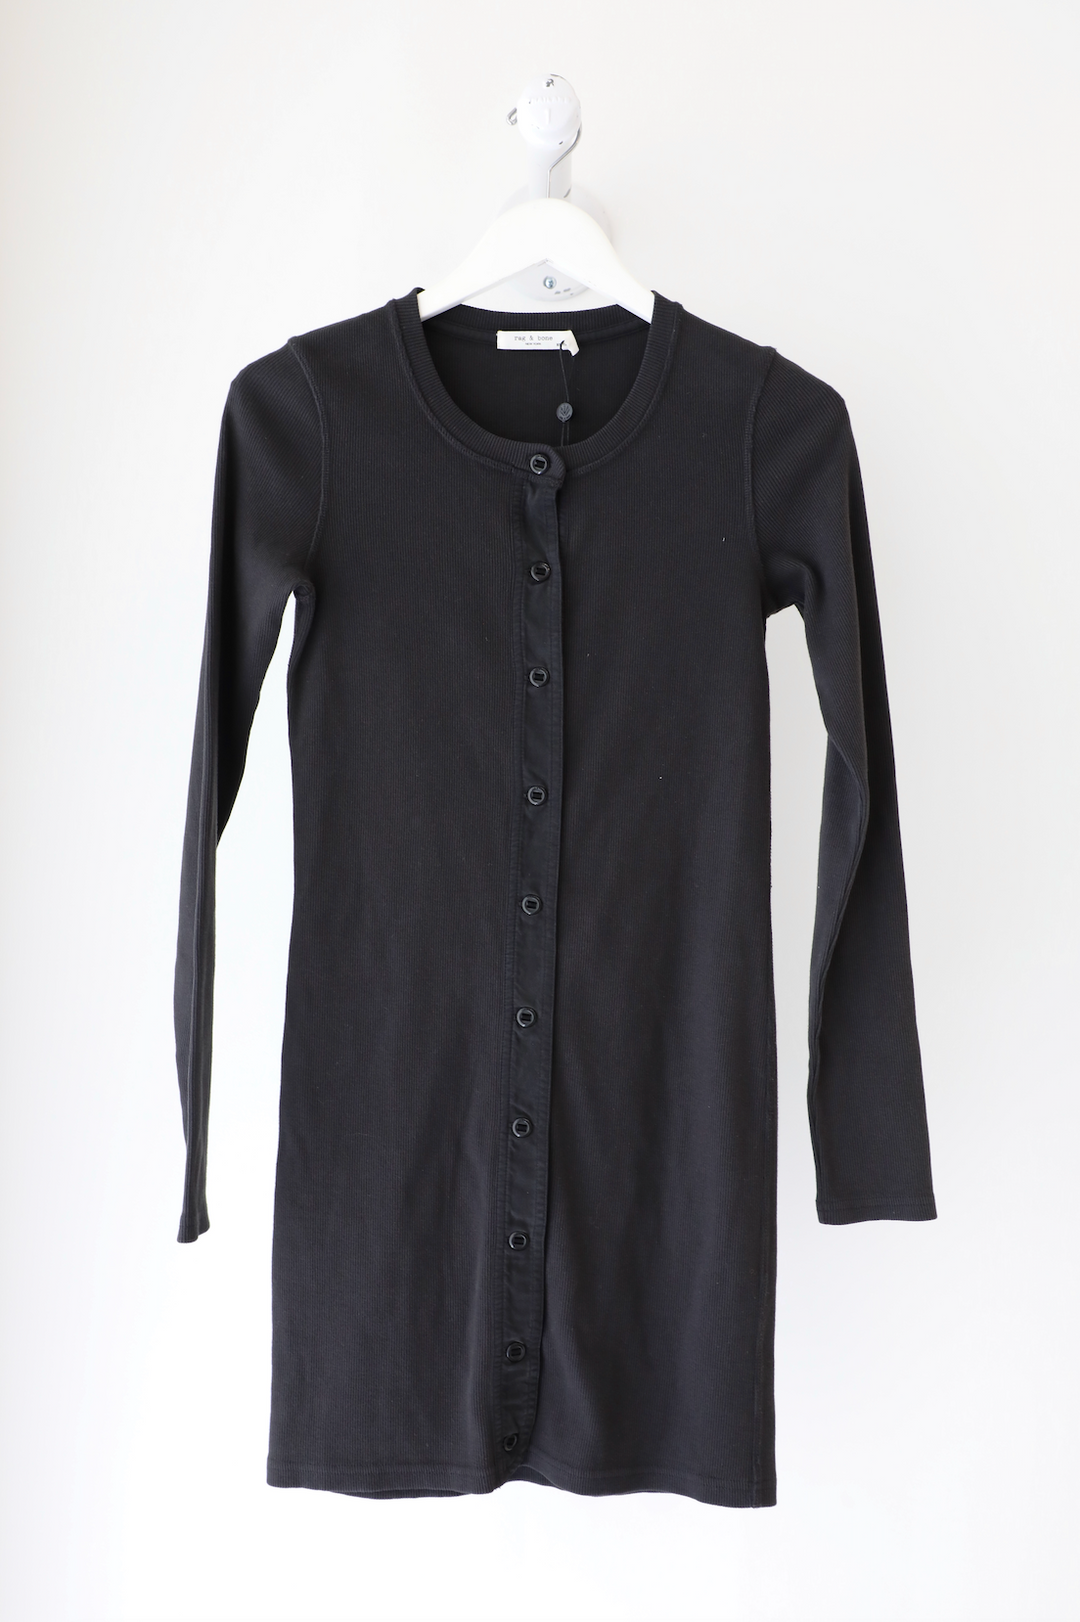 Rag & Bone - Mallory Thermal Dress in Black